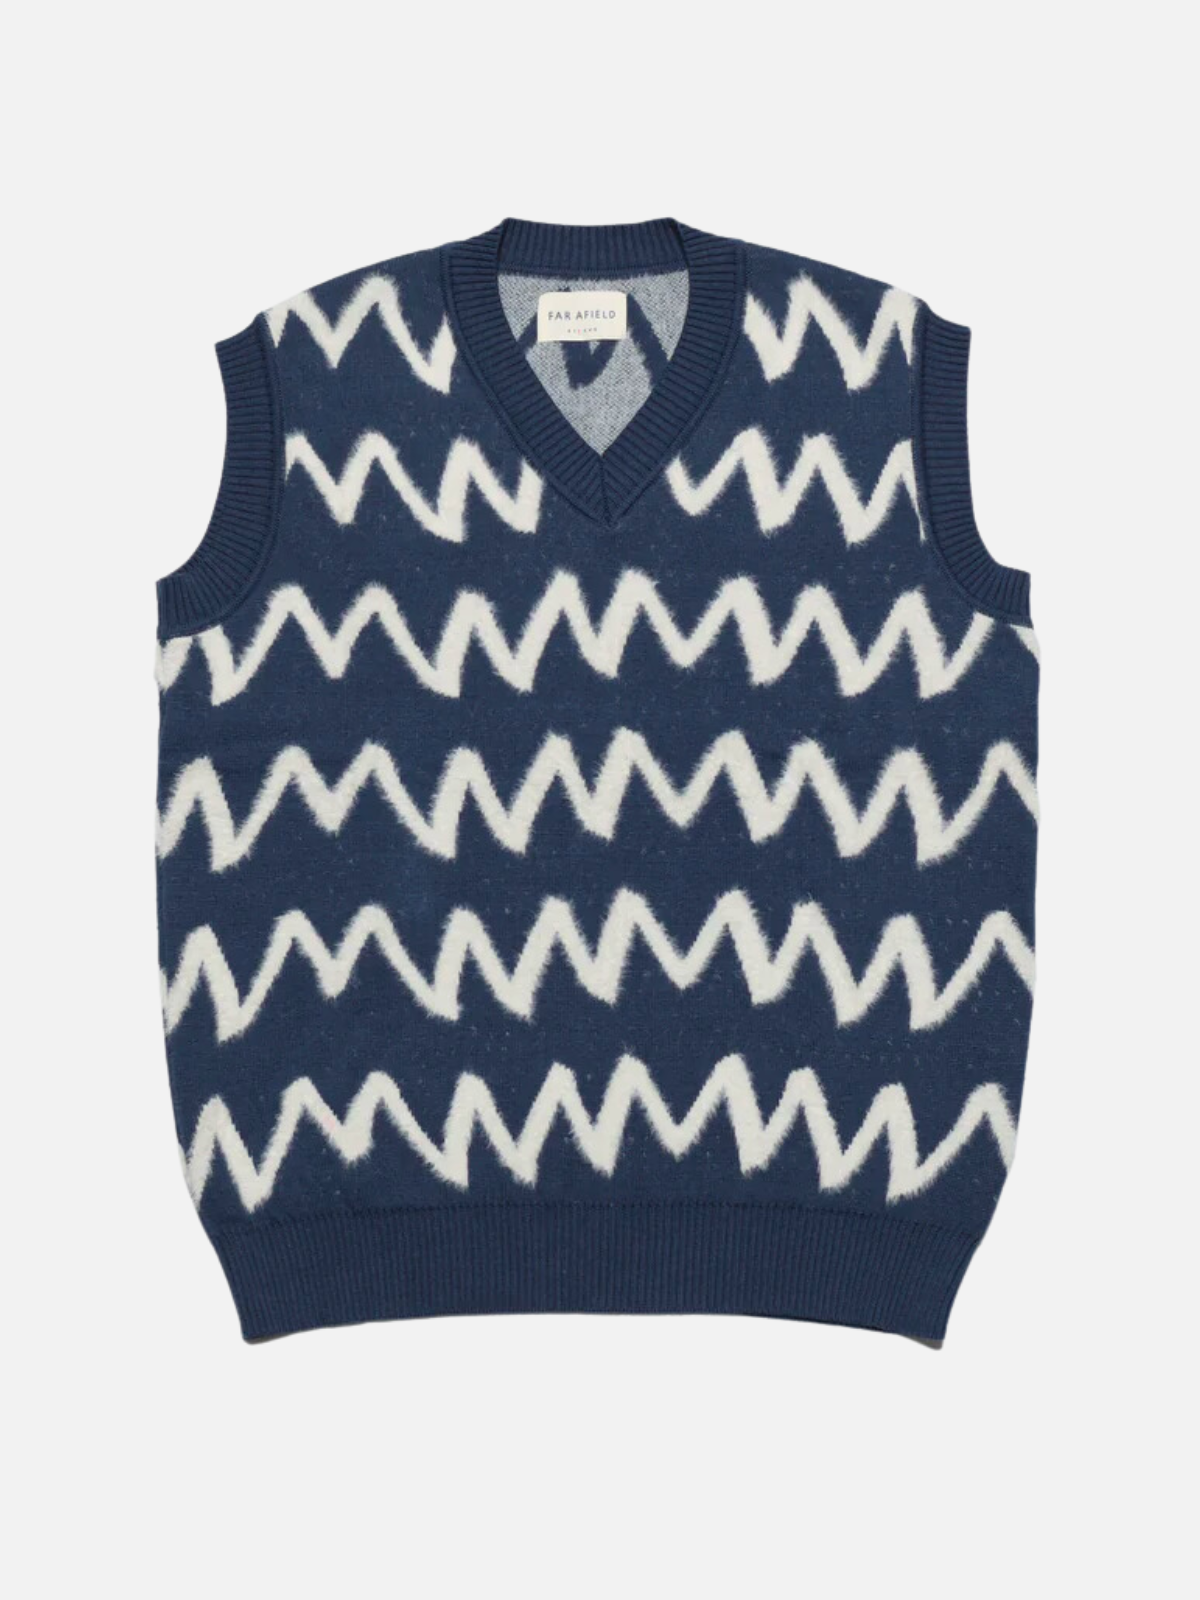 far afield pinto knit vest blue navy white zig zag pattern cotton acrylic kempt athens ga georgia men's clothing store downtown